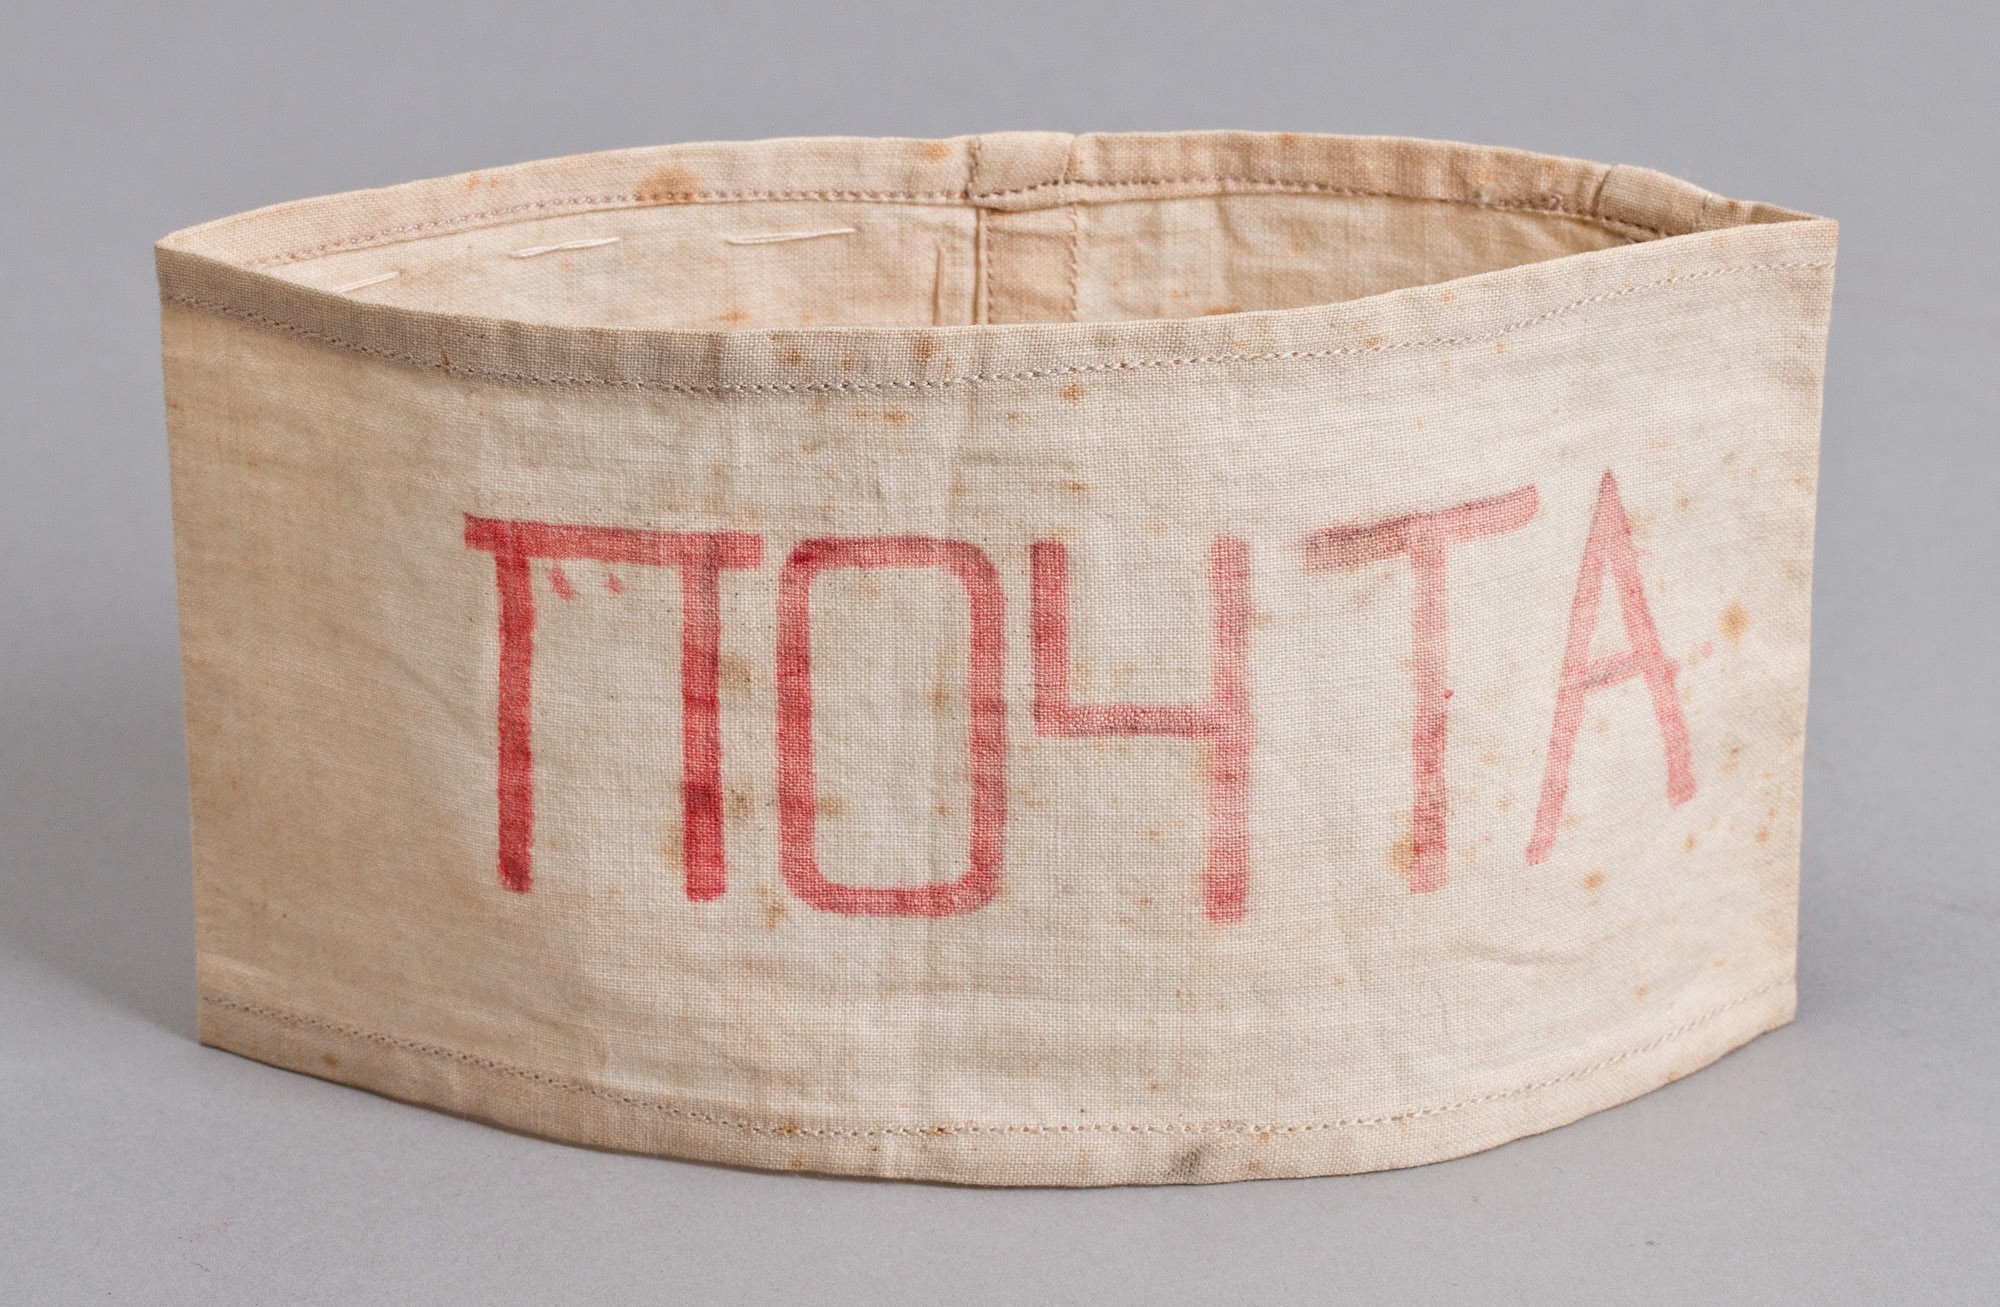 Postai karszalag  cirillbetűs „POSTA” felirattal (Postamúzeum CC BY-NC-SA)